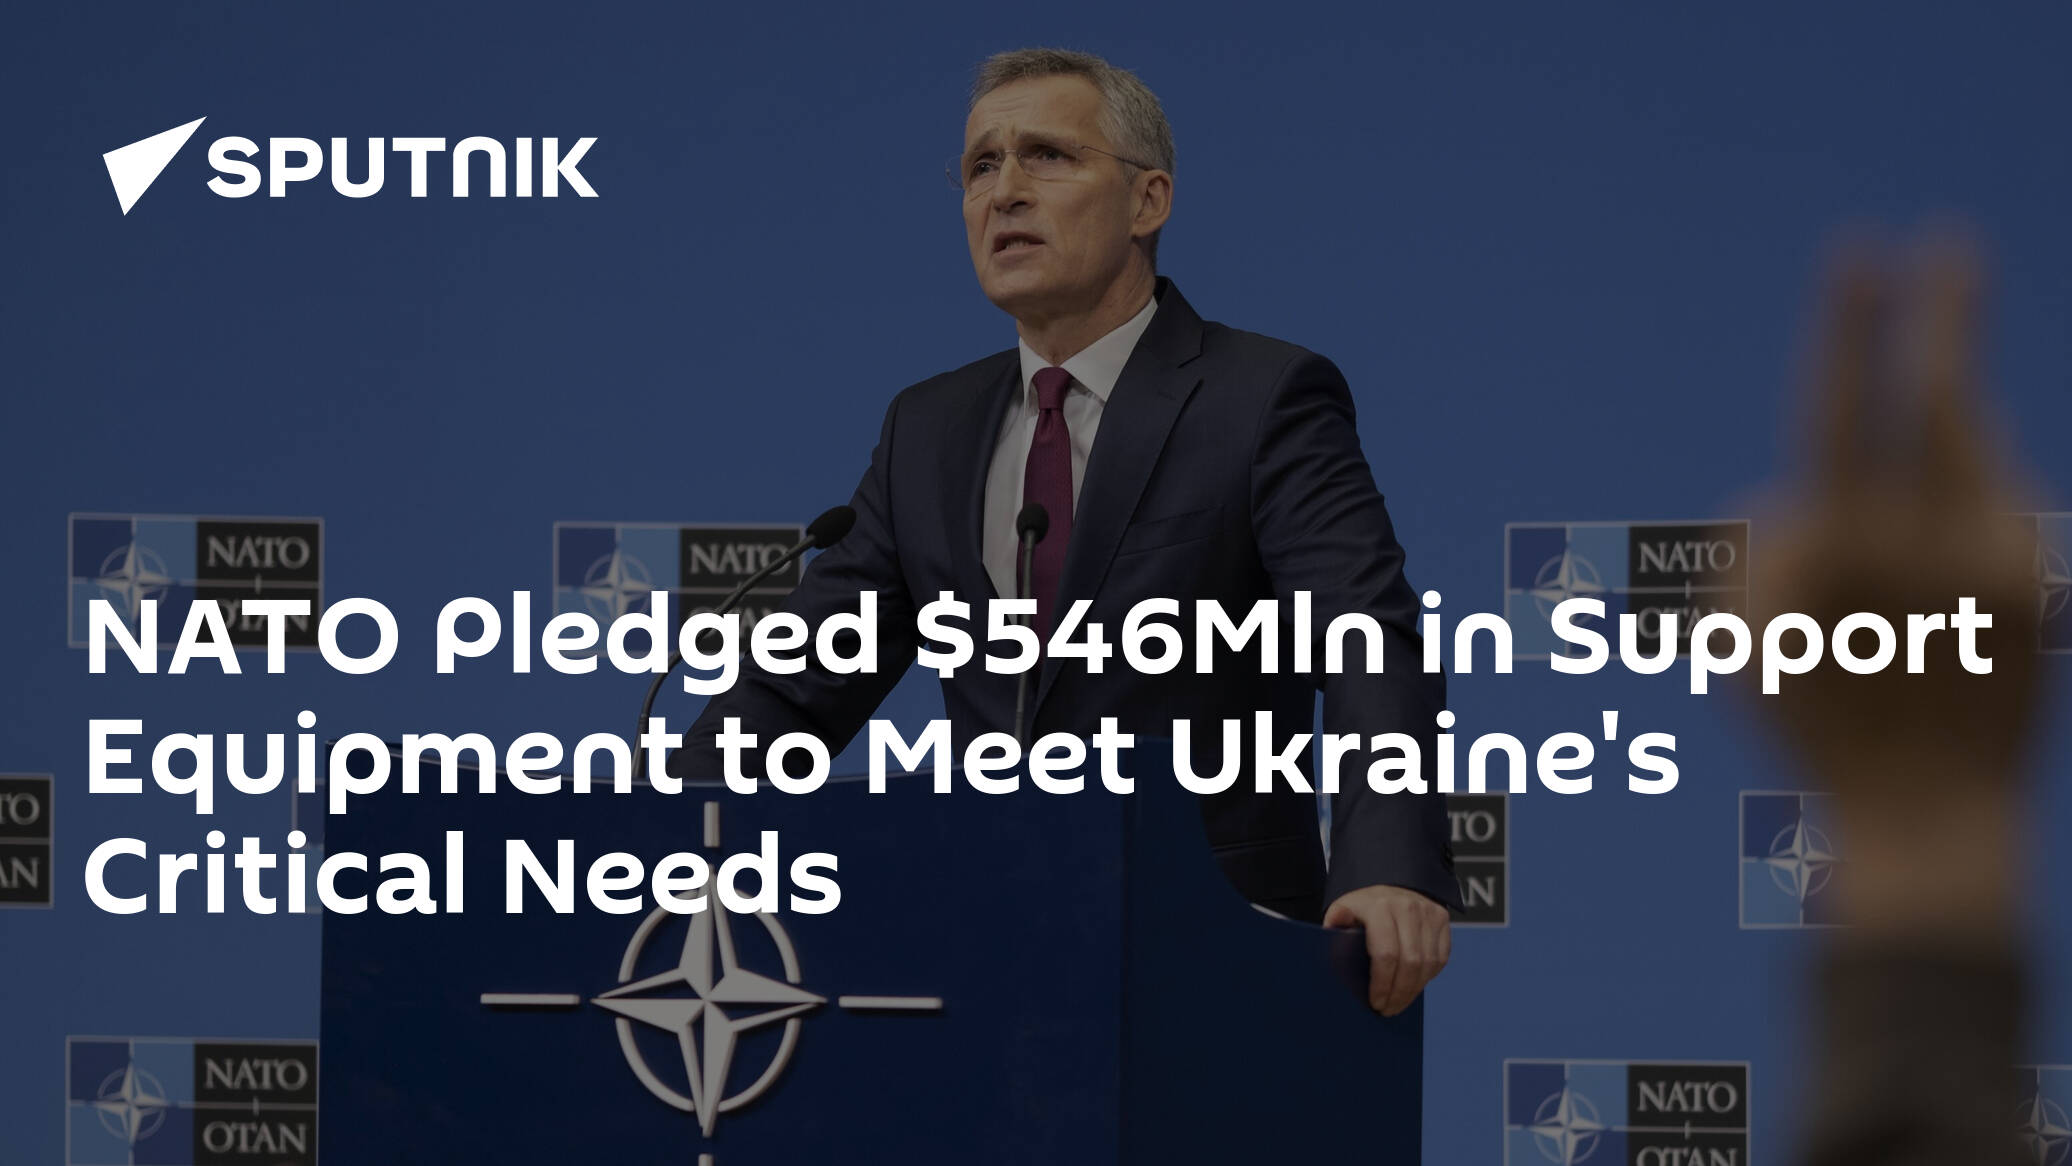 NATO Pledged 6Mln in Support Equipment to Meet Ukraine's Critical Needs